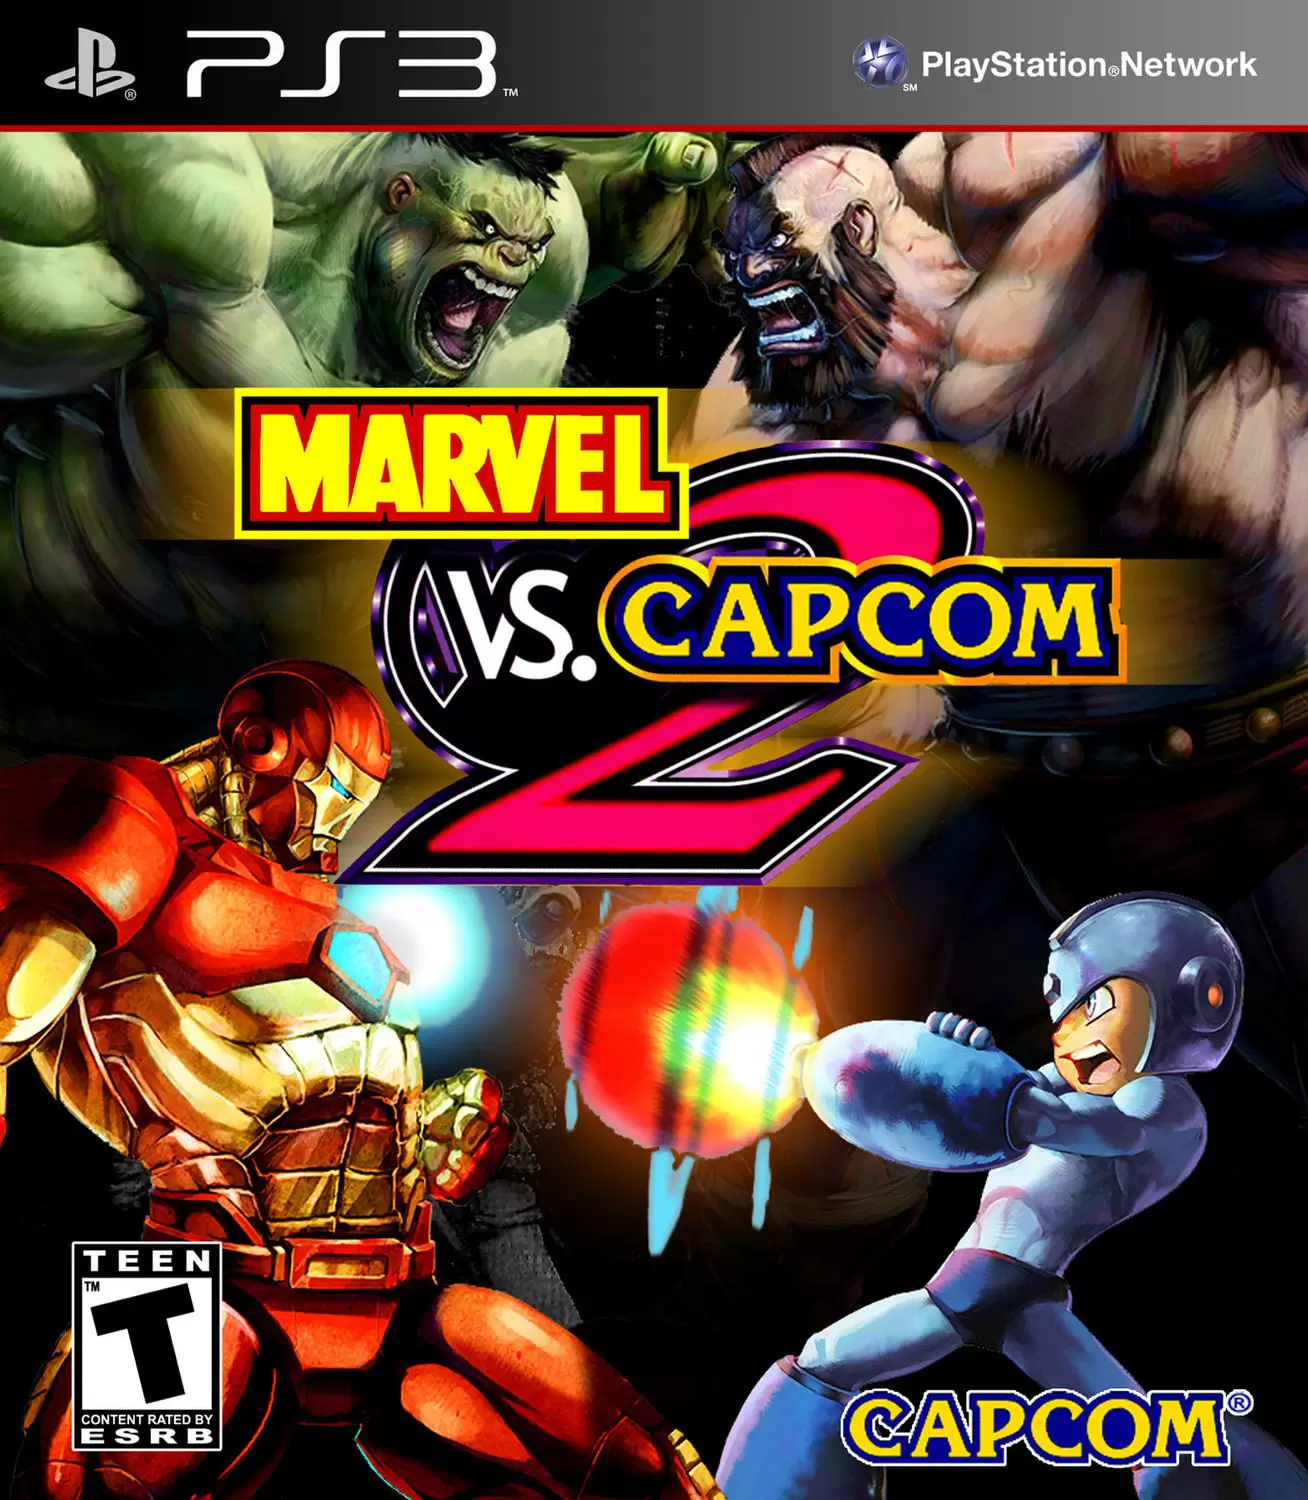 PS3 Games - Marvel vs. Capcom 2: New Age of Heroes